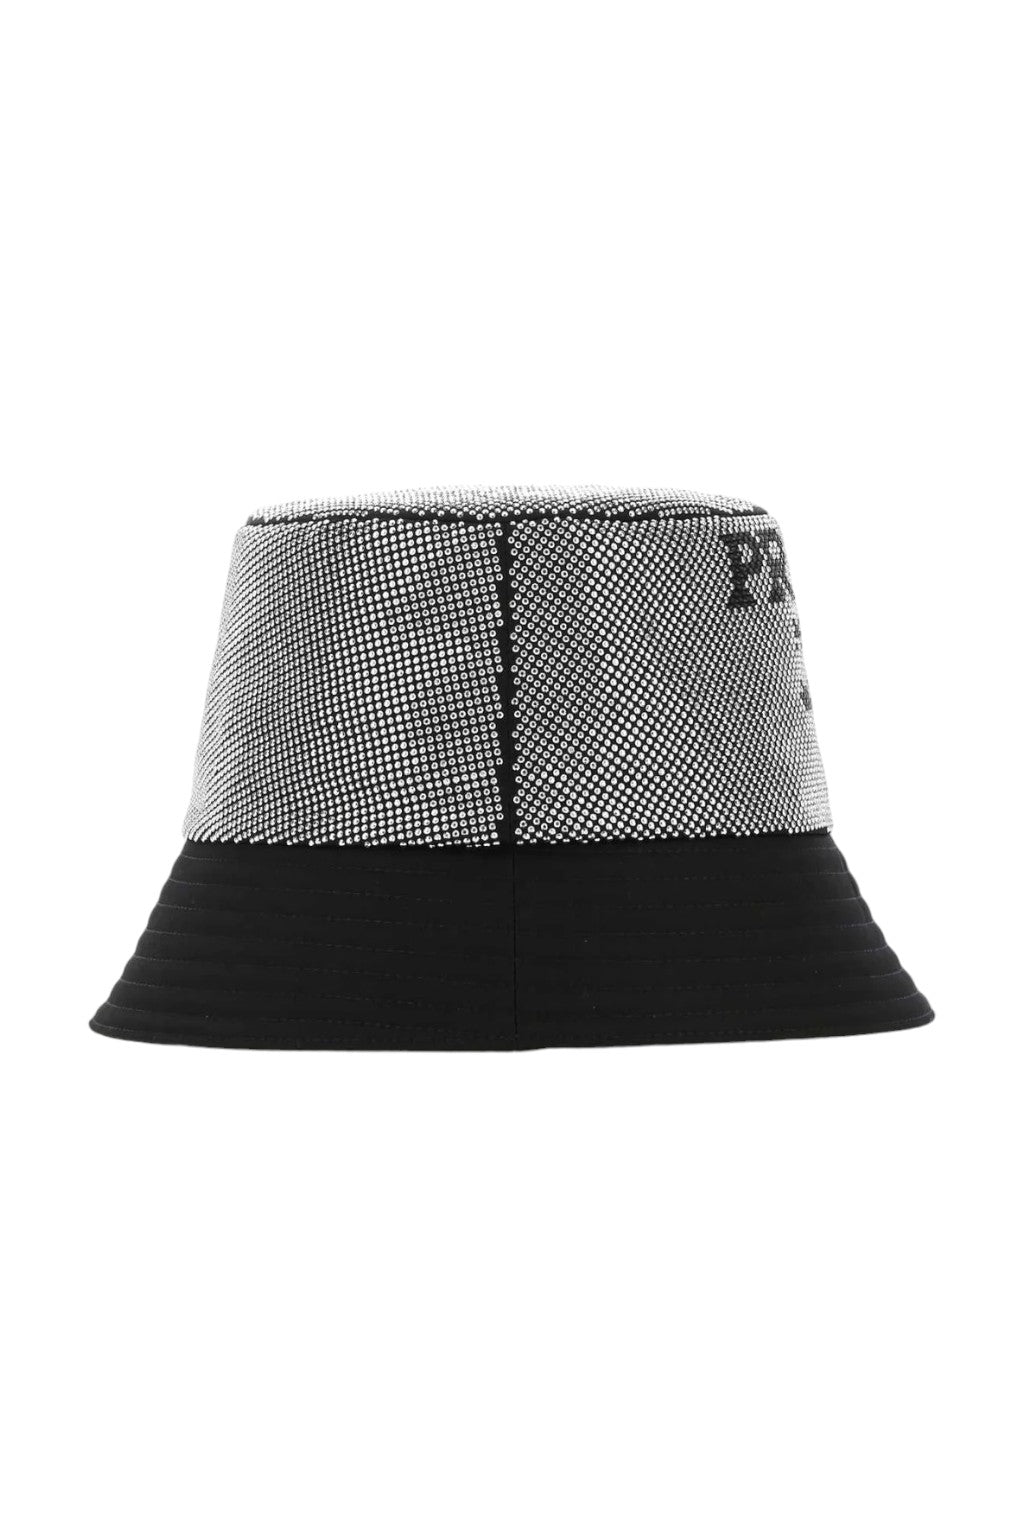 Prada Re-Nylon Studded Bucket Hat